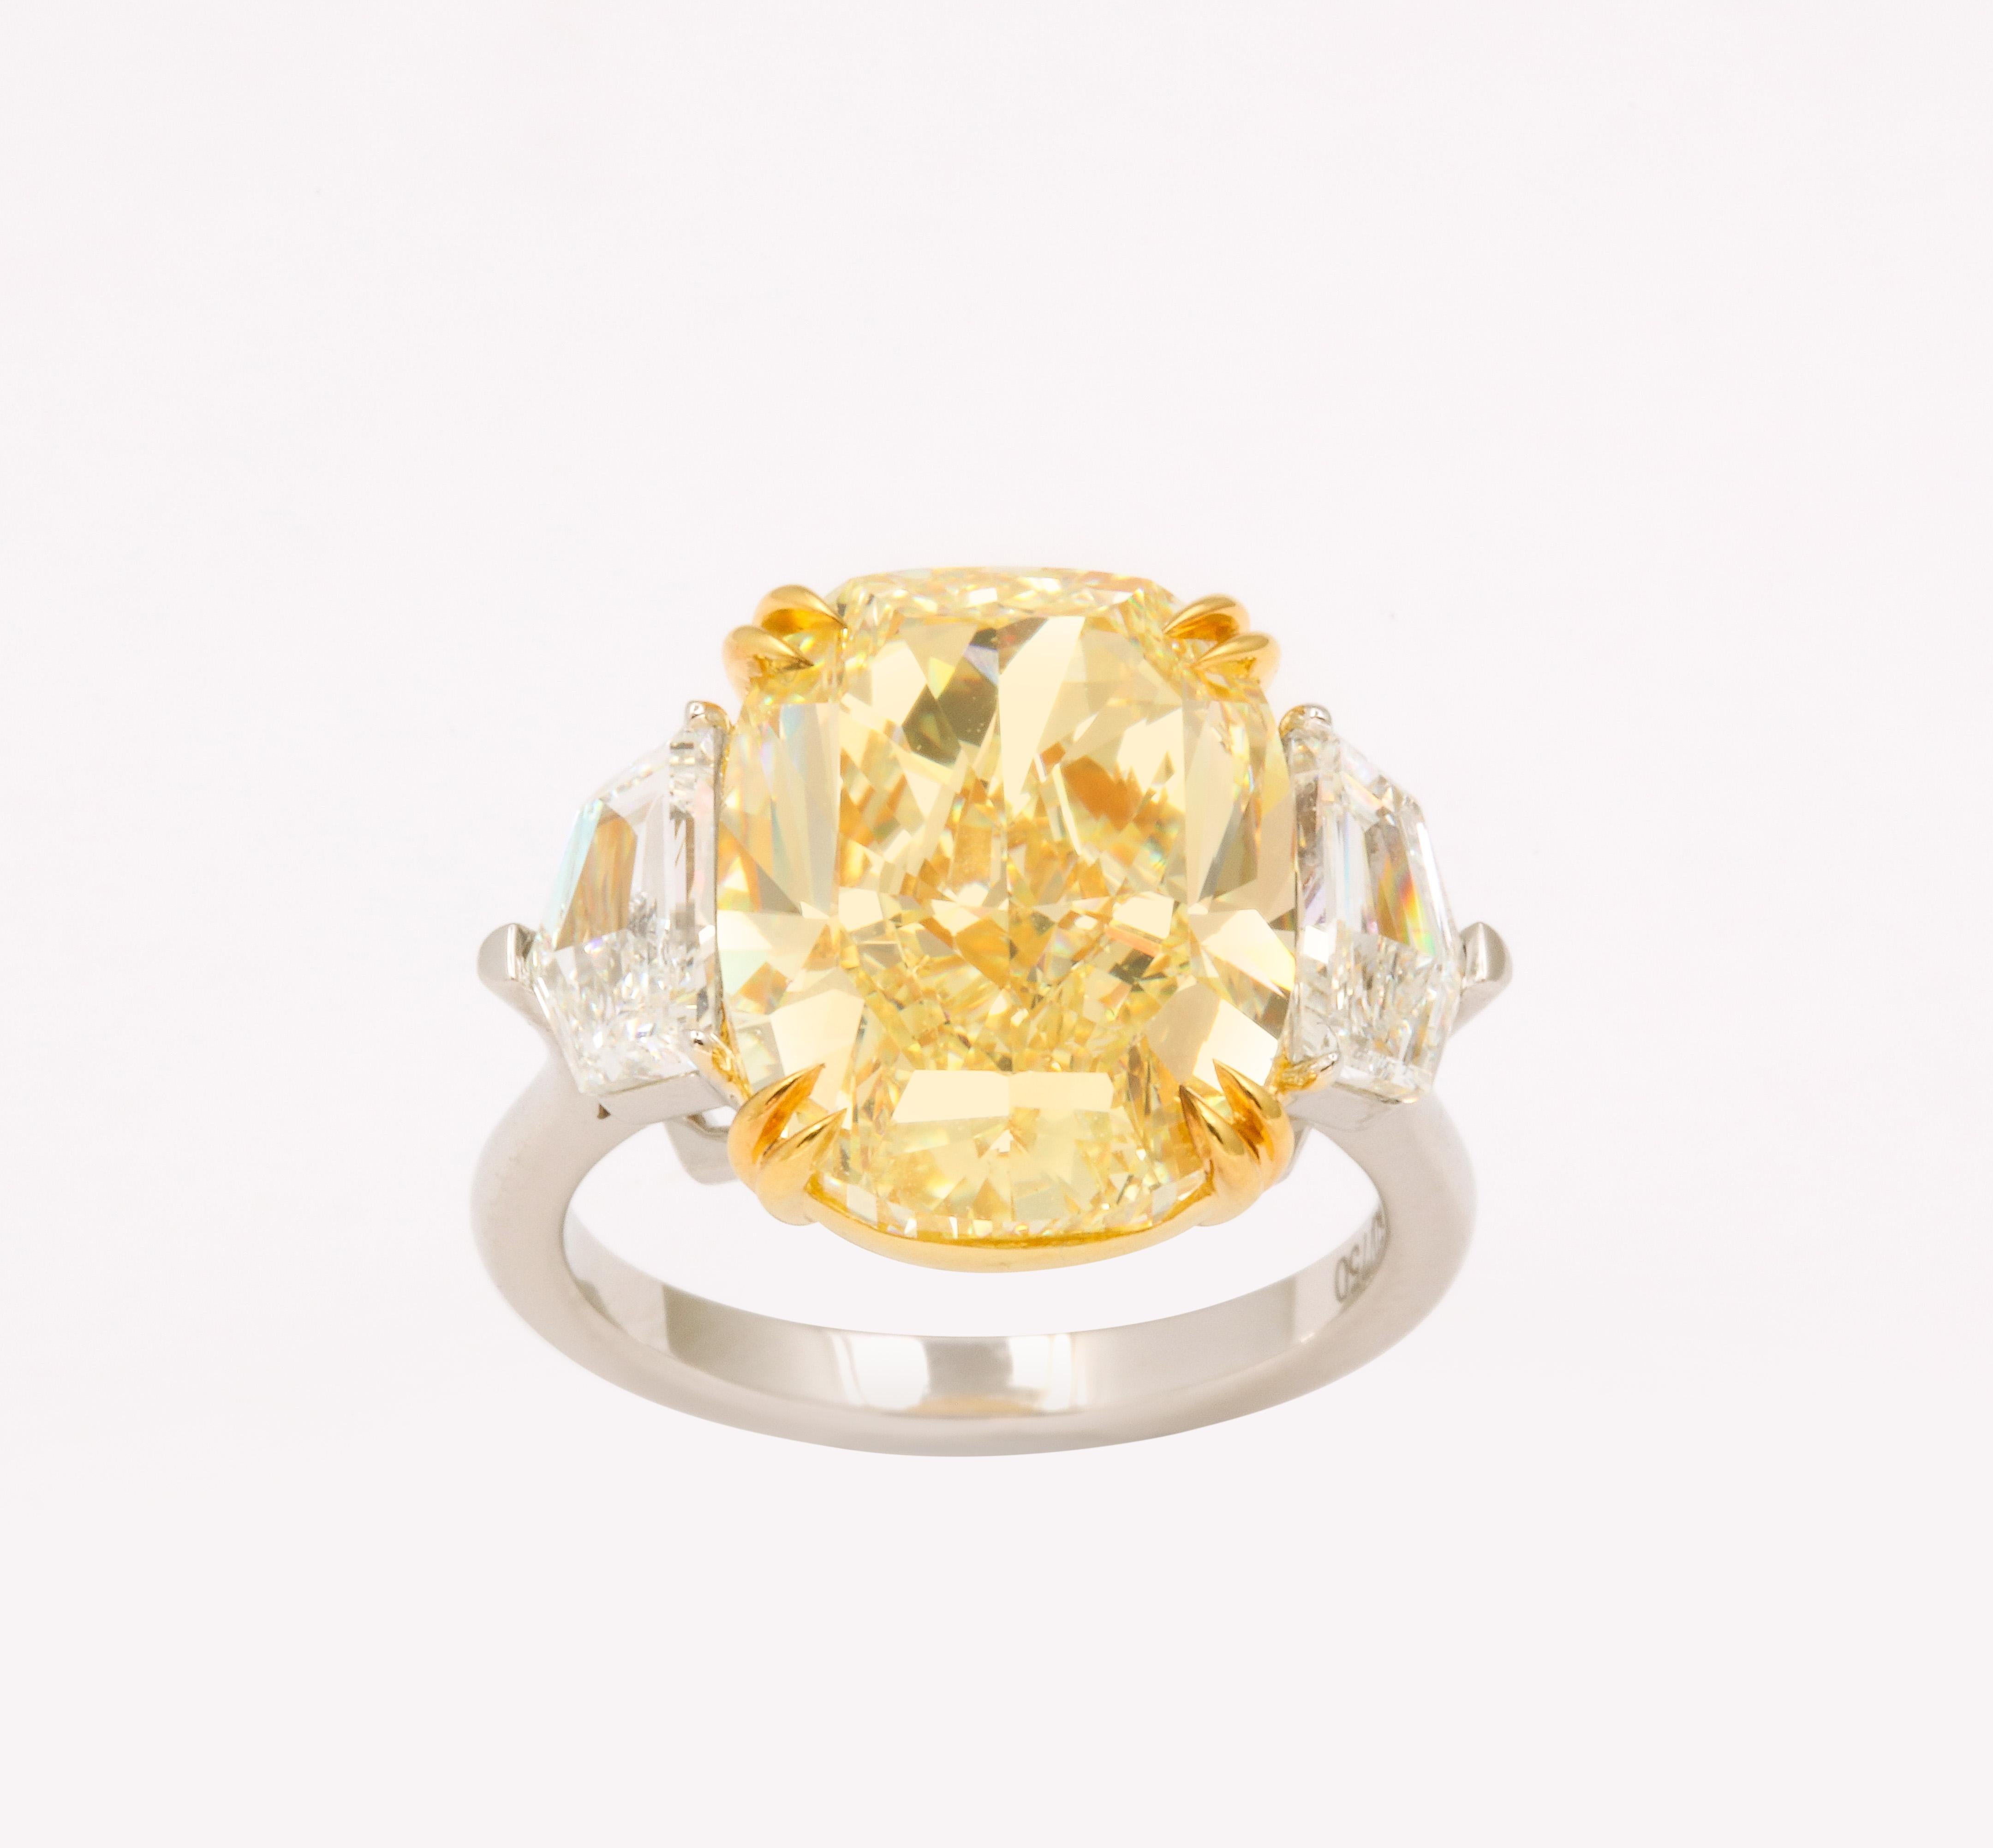 10 Carat Fancy Yellow Diamond Ring 2